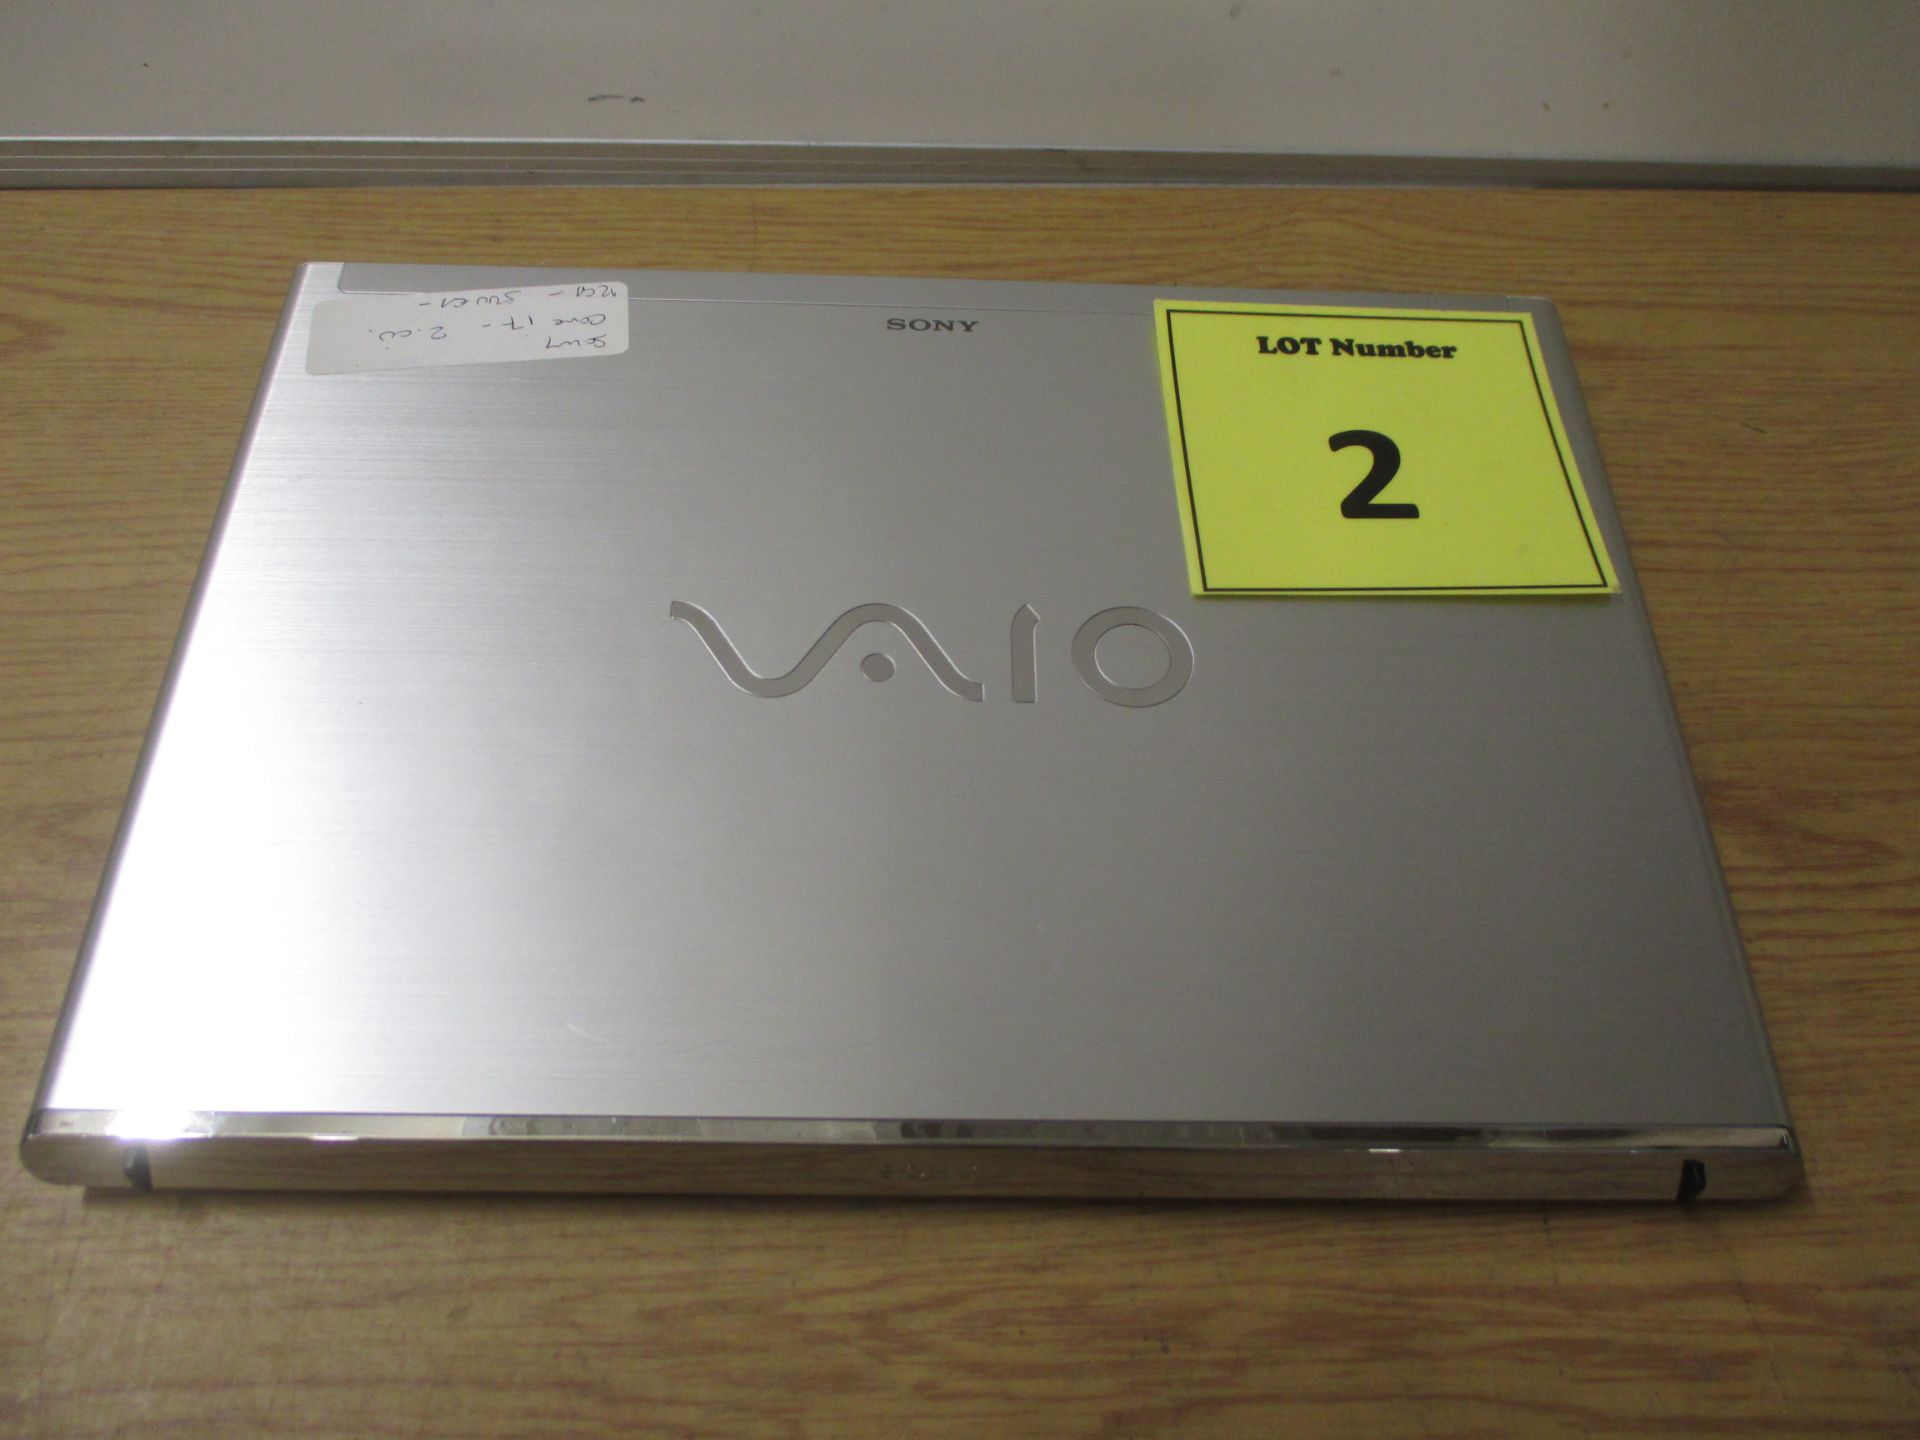 SONY VAIO CORE i7 2GHZ LAPTOP 12GB RAM, 500GB HDD. MODEL SVT131B11M. WITH PSU - Image 5 of 7